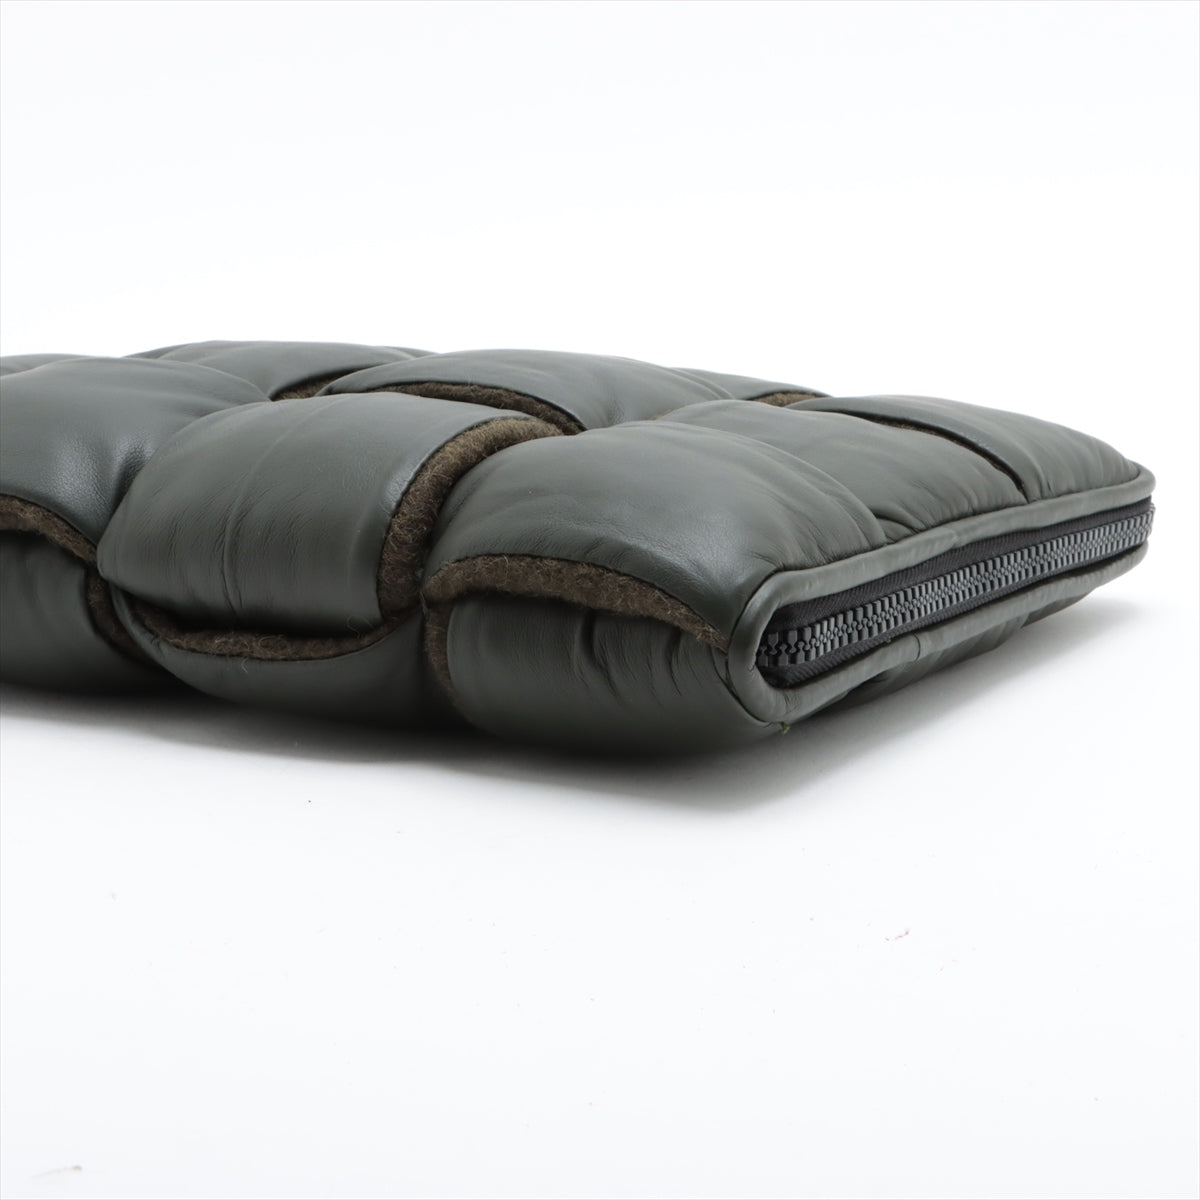 Bottega Veneta Maxi Intrecciato Leather Clutch Bag Khaki